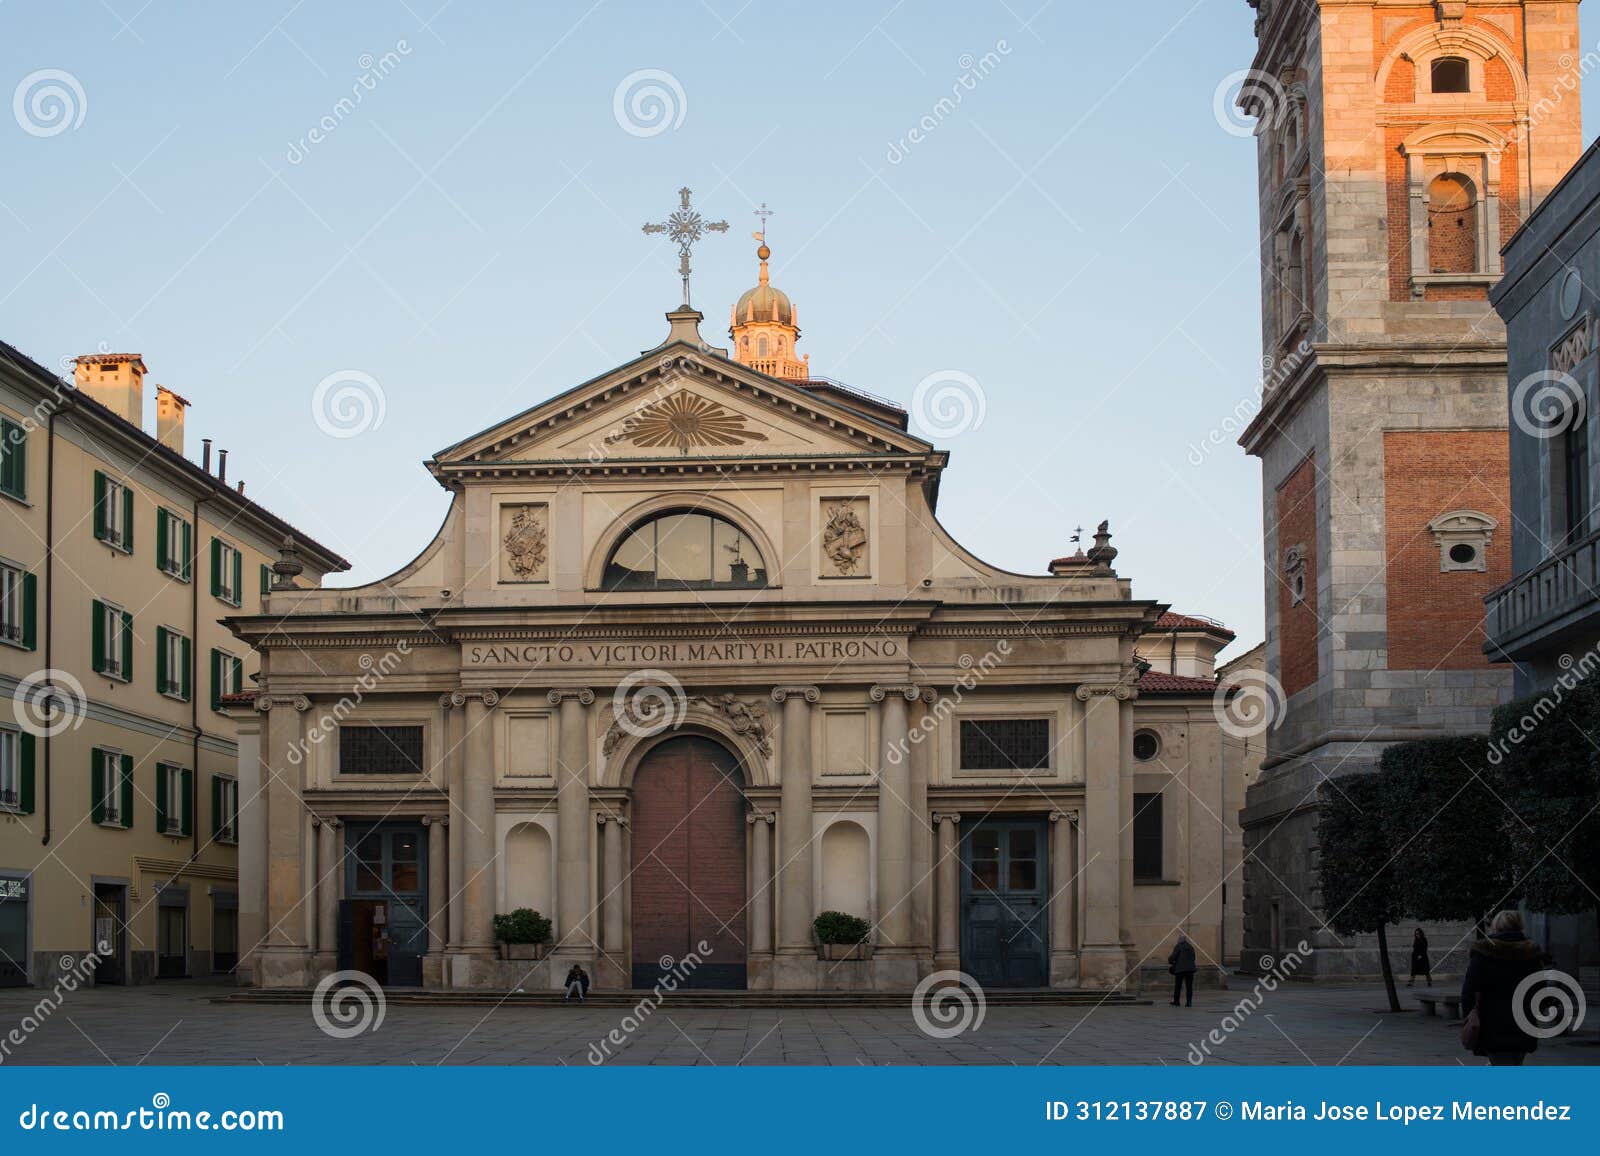 basilica of saint vittore in varese, italy